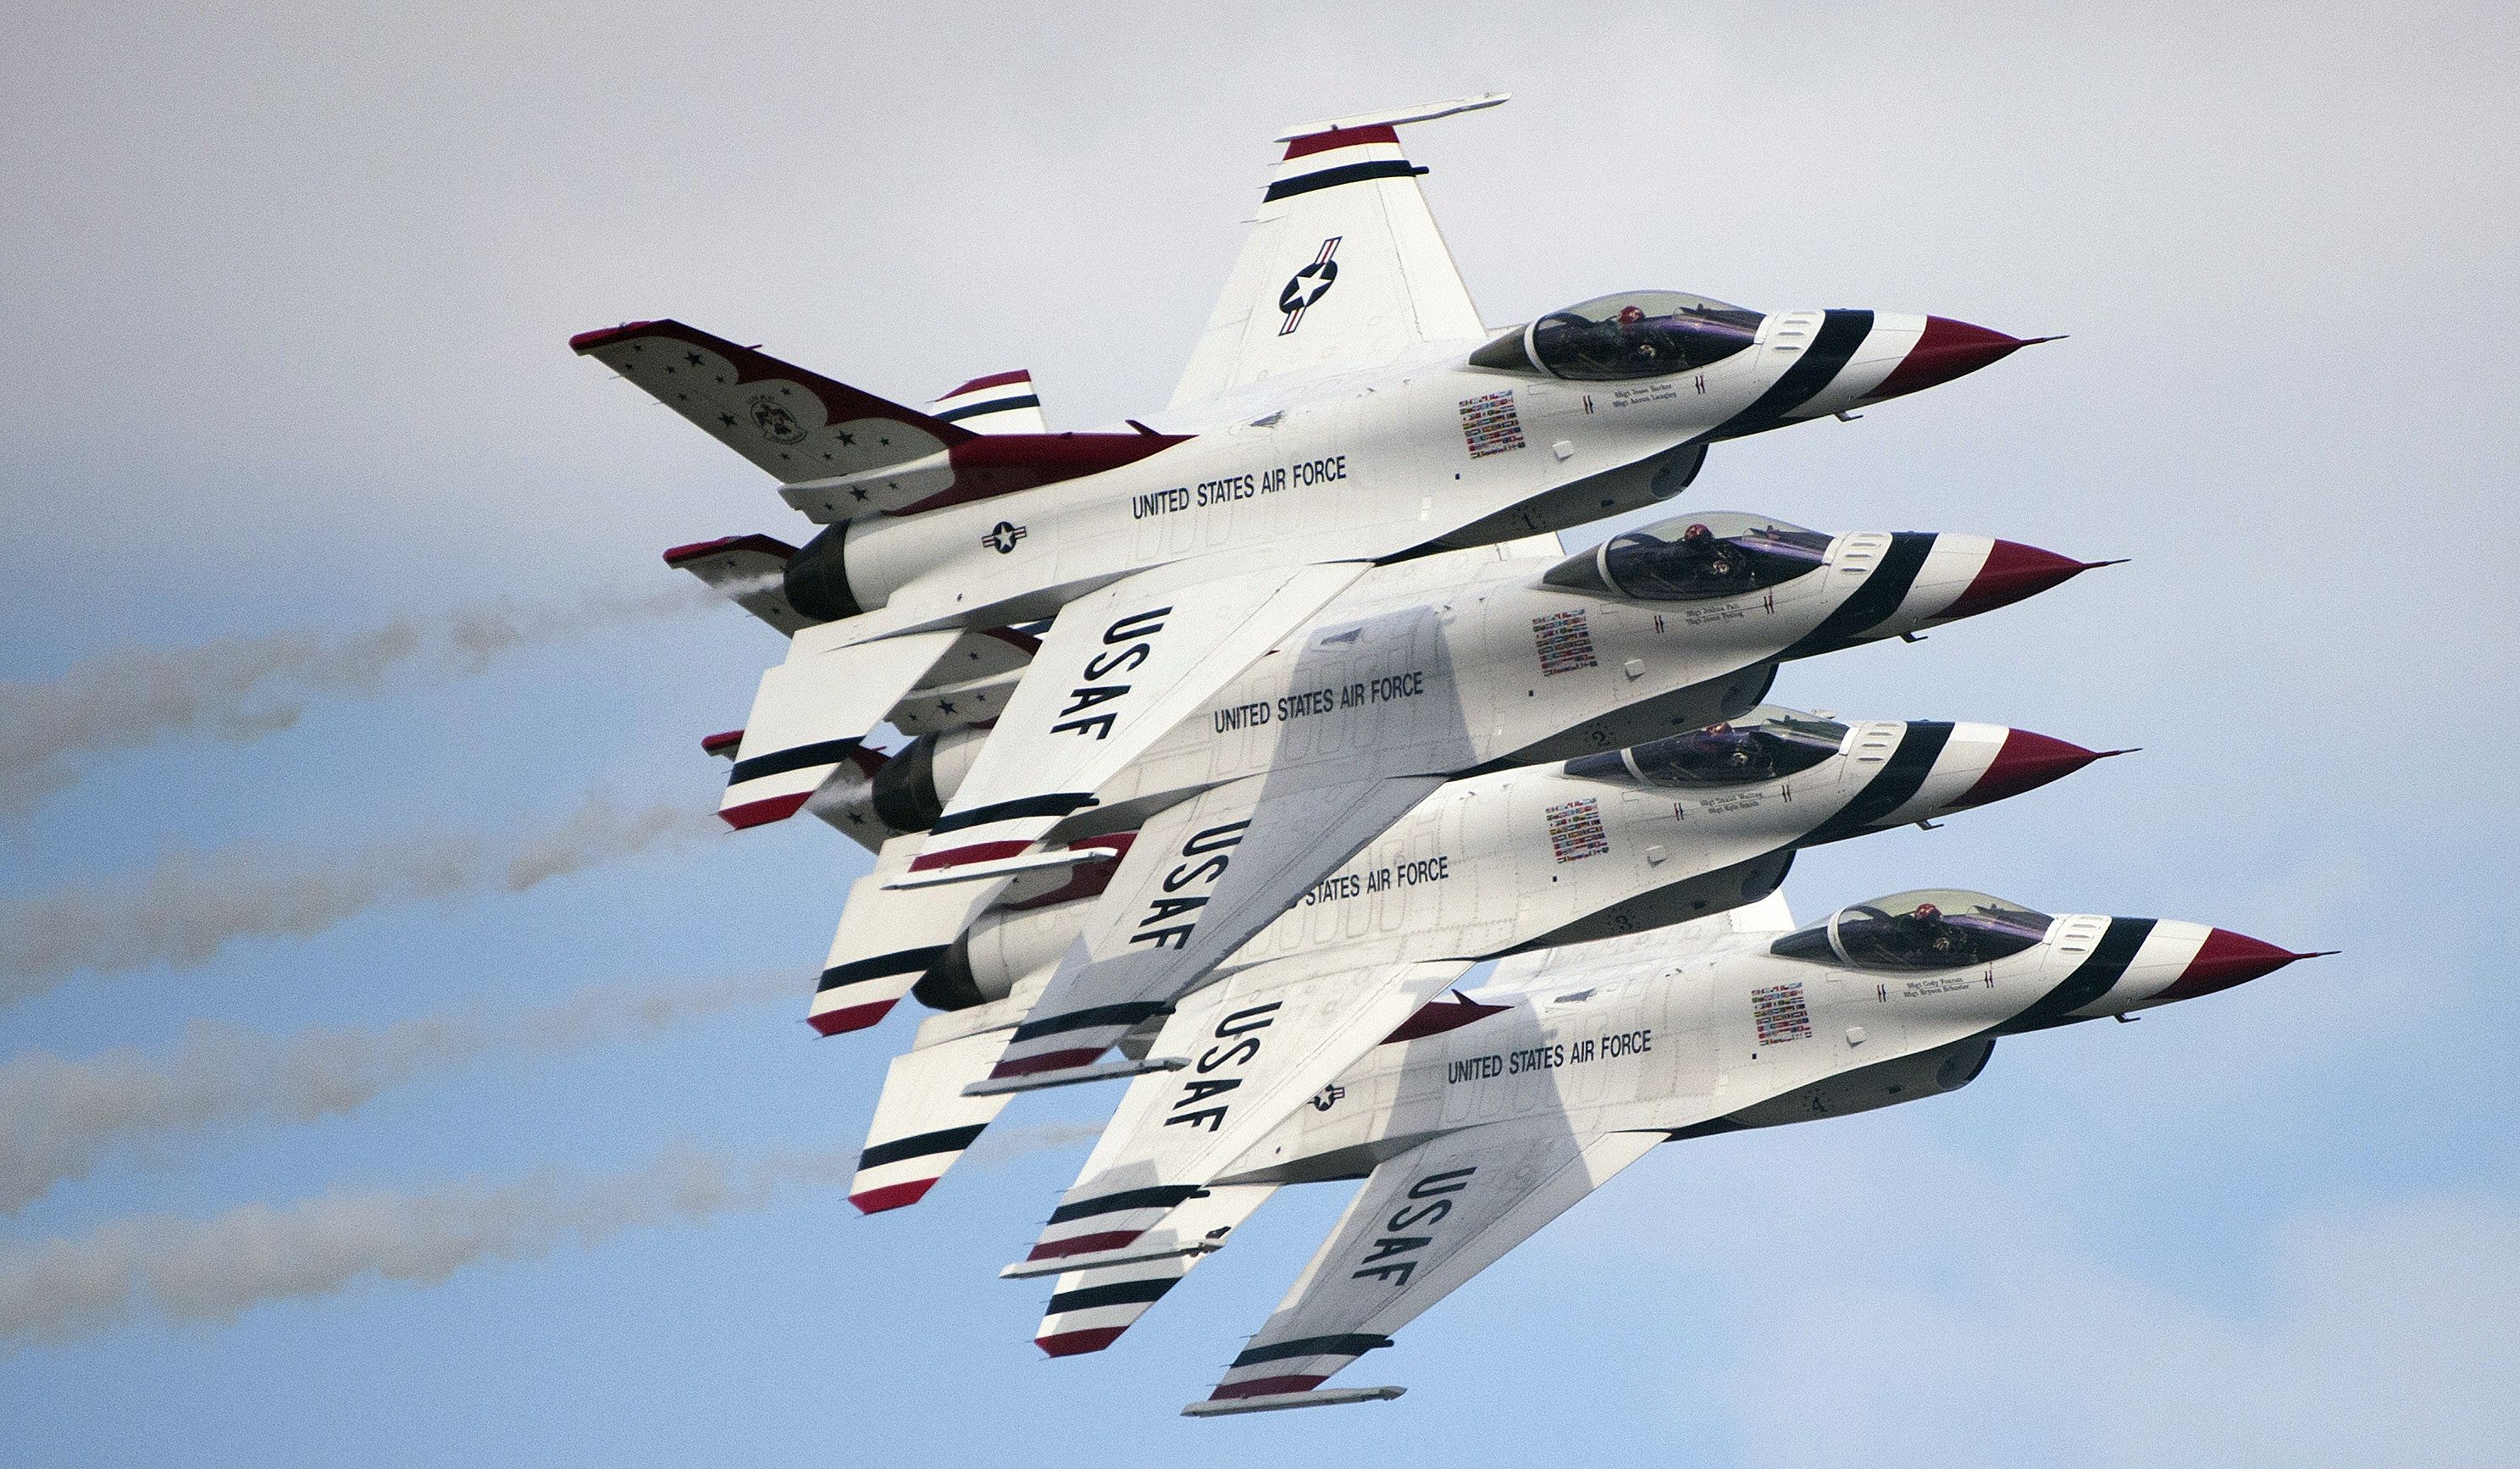 U.S. Air Force Thunderbirds Pilot Killed In Plane Crash | Time